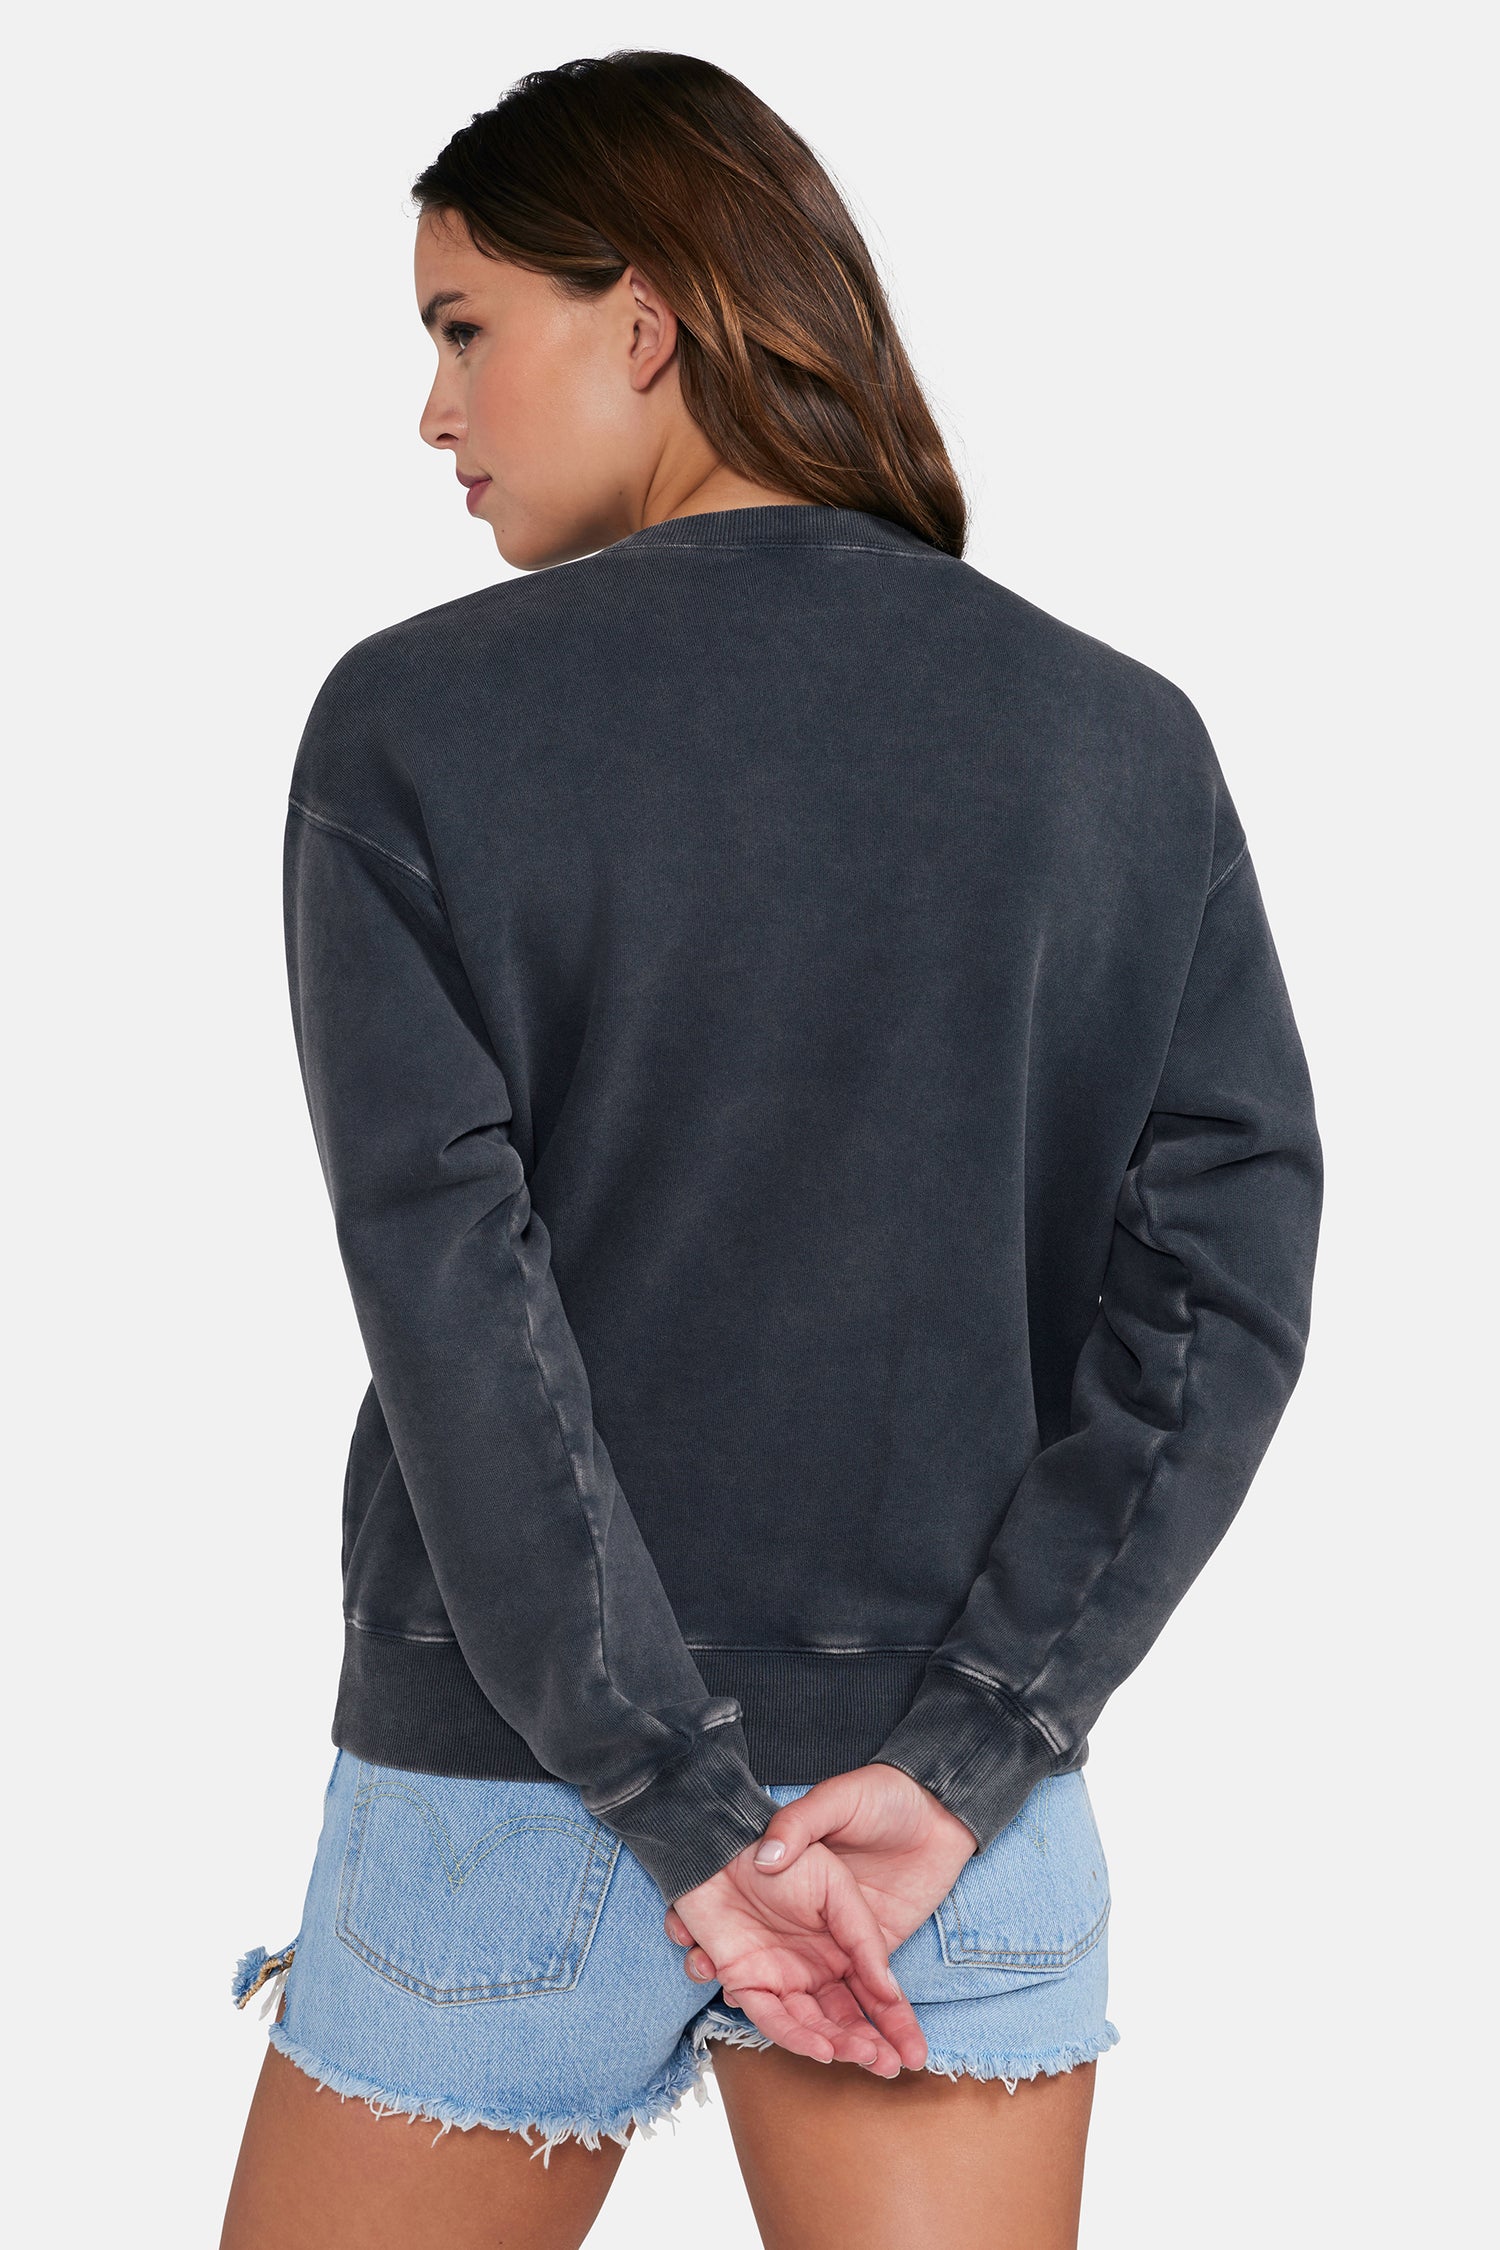 La Marais Cody Sweatshirt | Washed Black